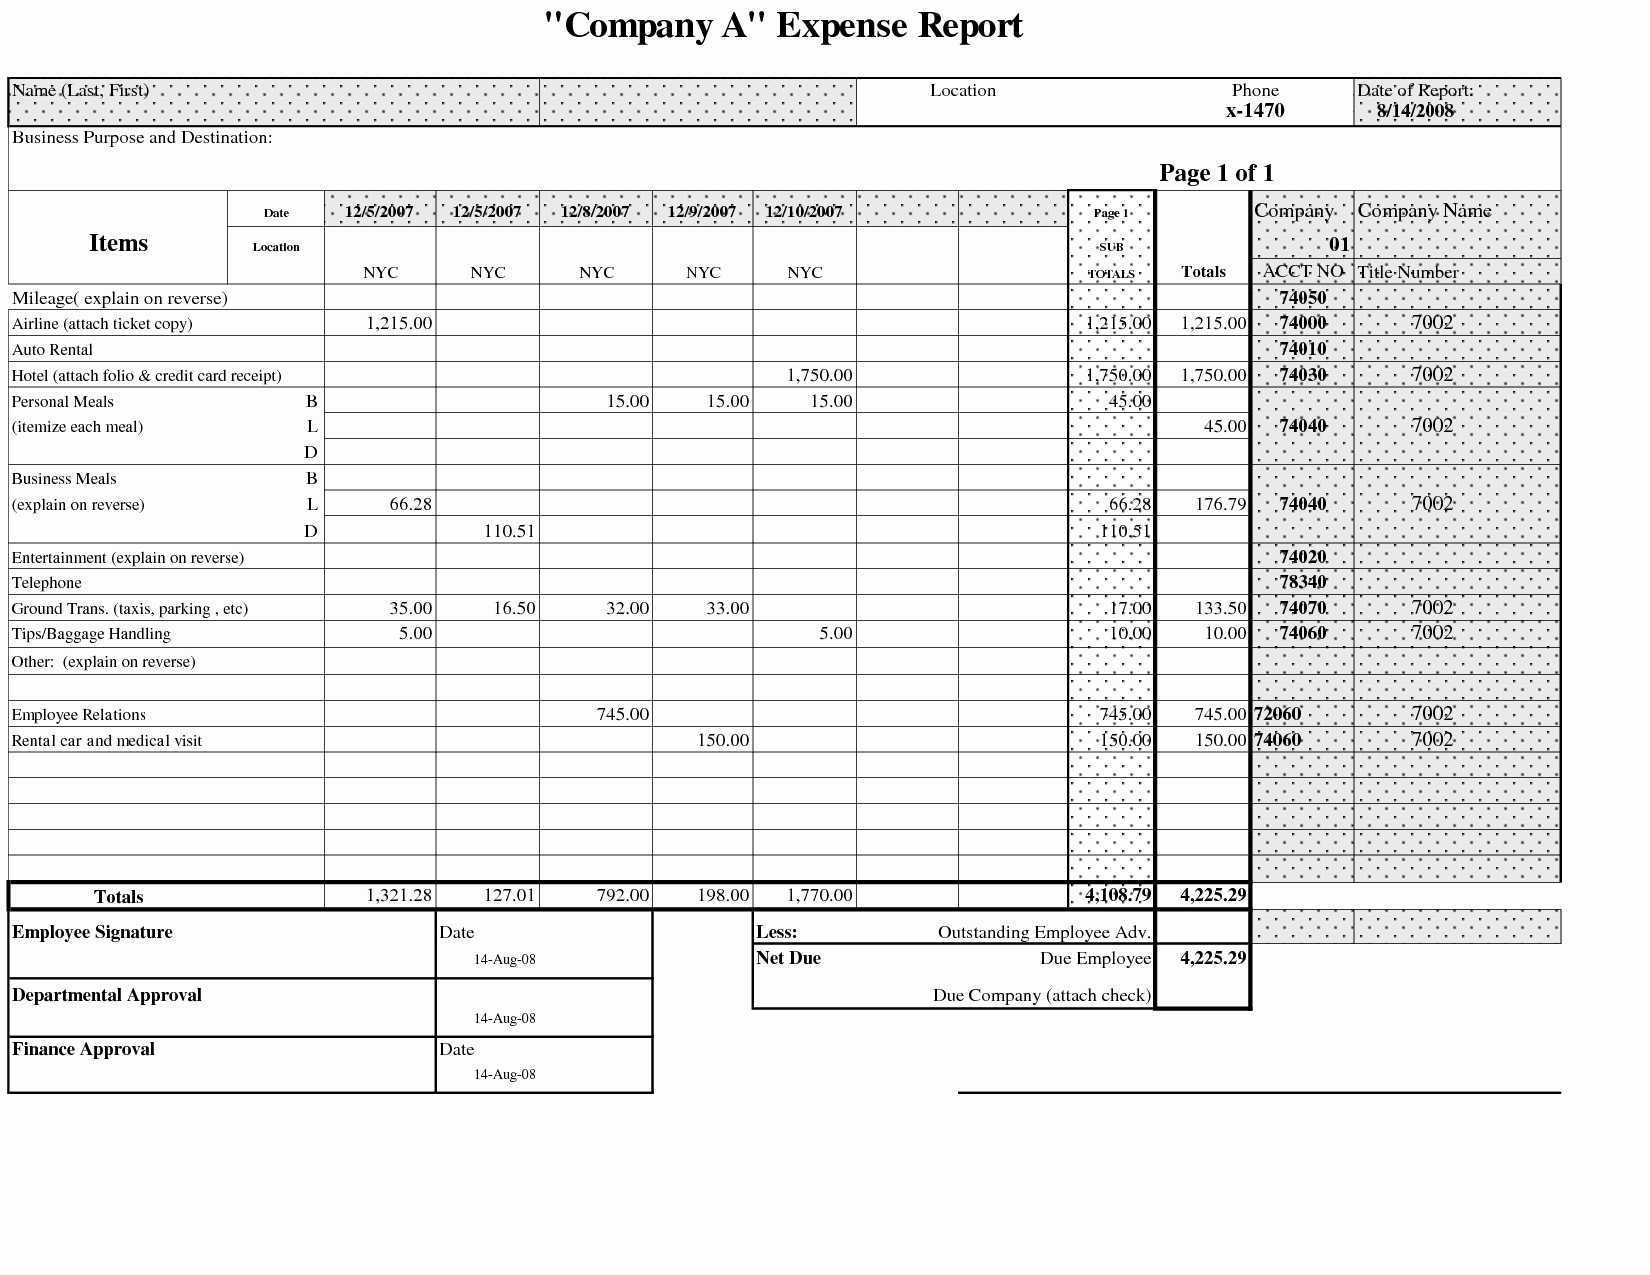 Gas Mileage Spreadsheet Of Annual Expense Report Template Or Inside Gas Mileage Expense Report Template